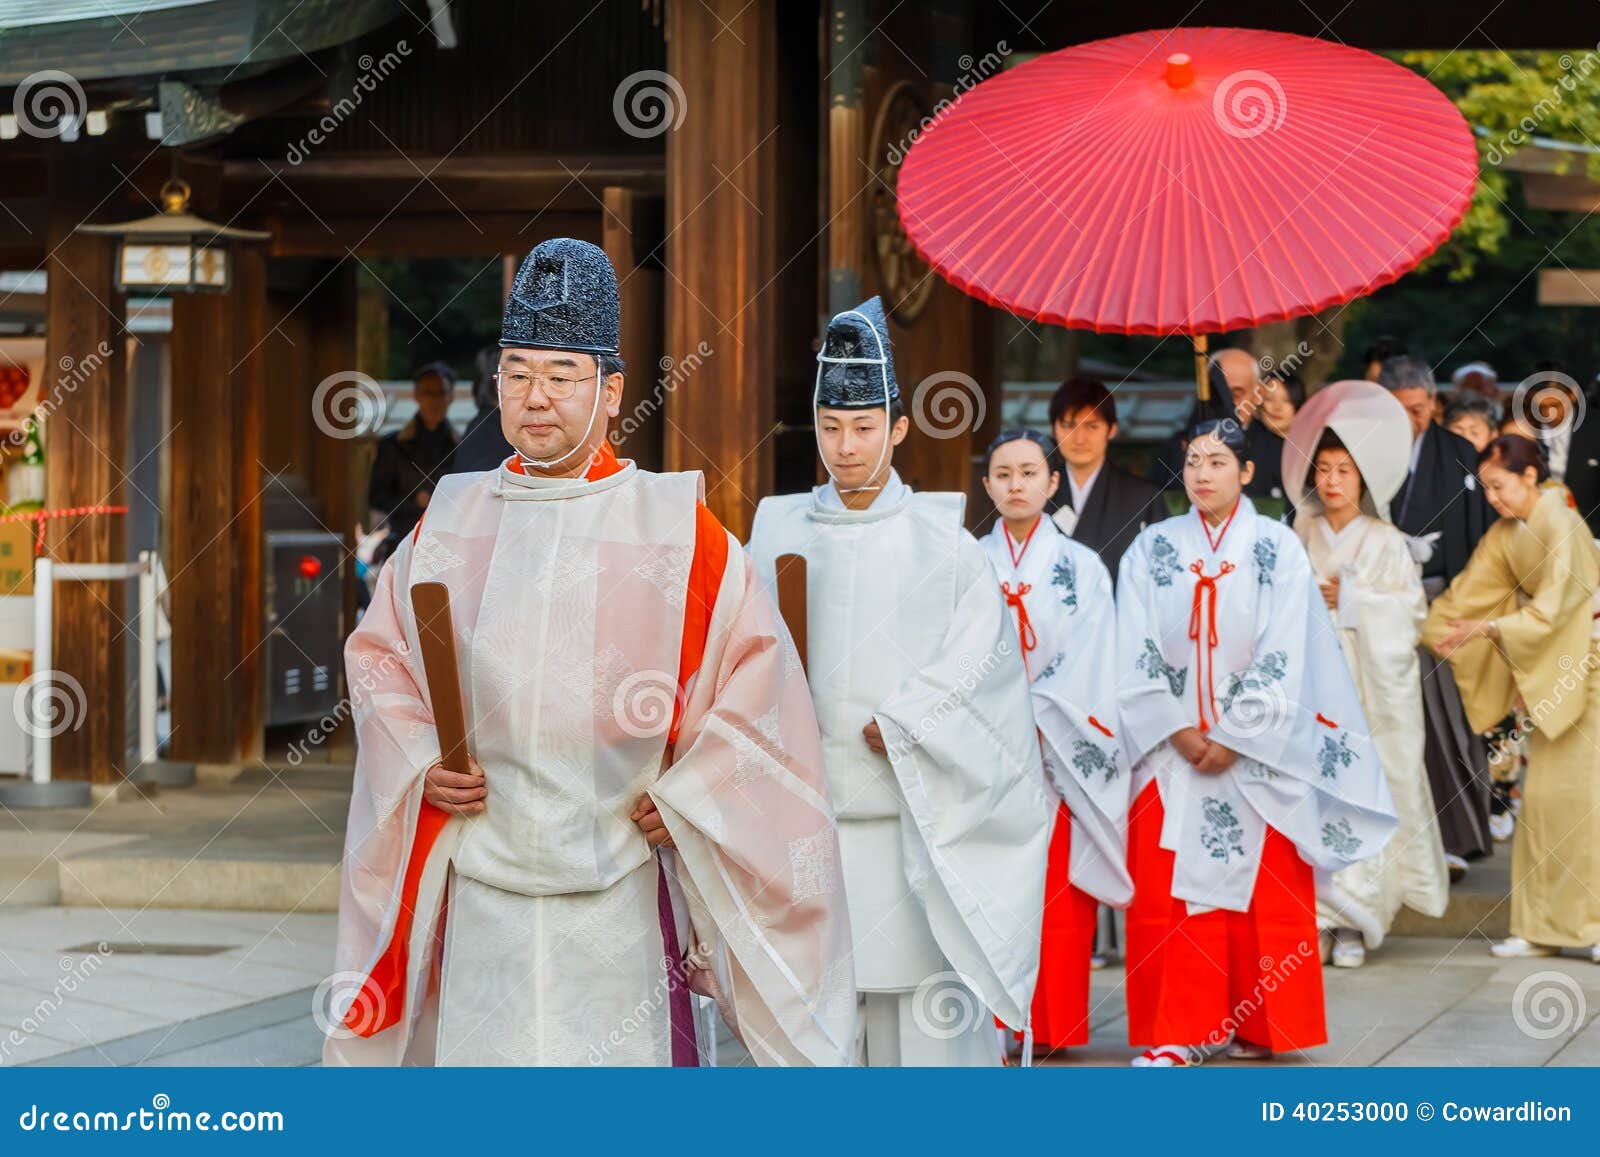 Onmyoji Japanese  Priest In A Japanese  Wedding  Ceremony 